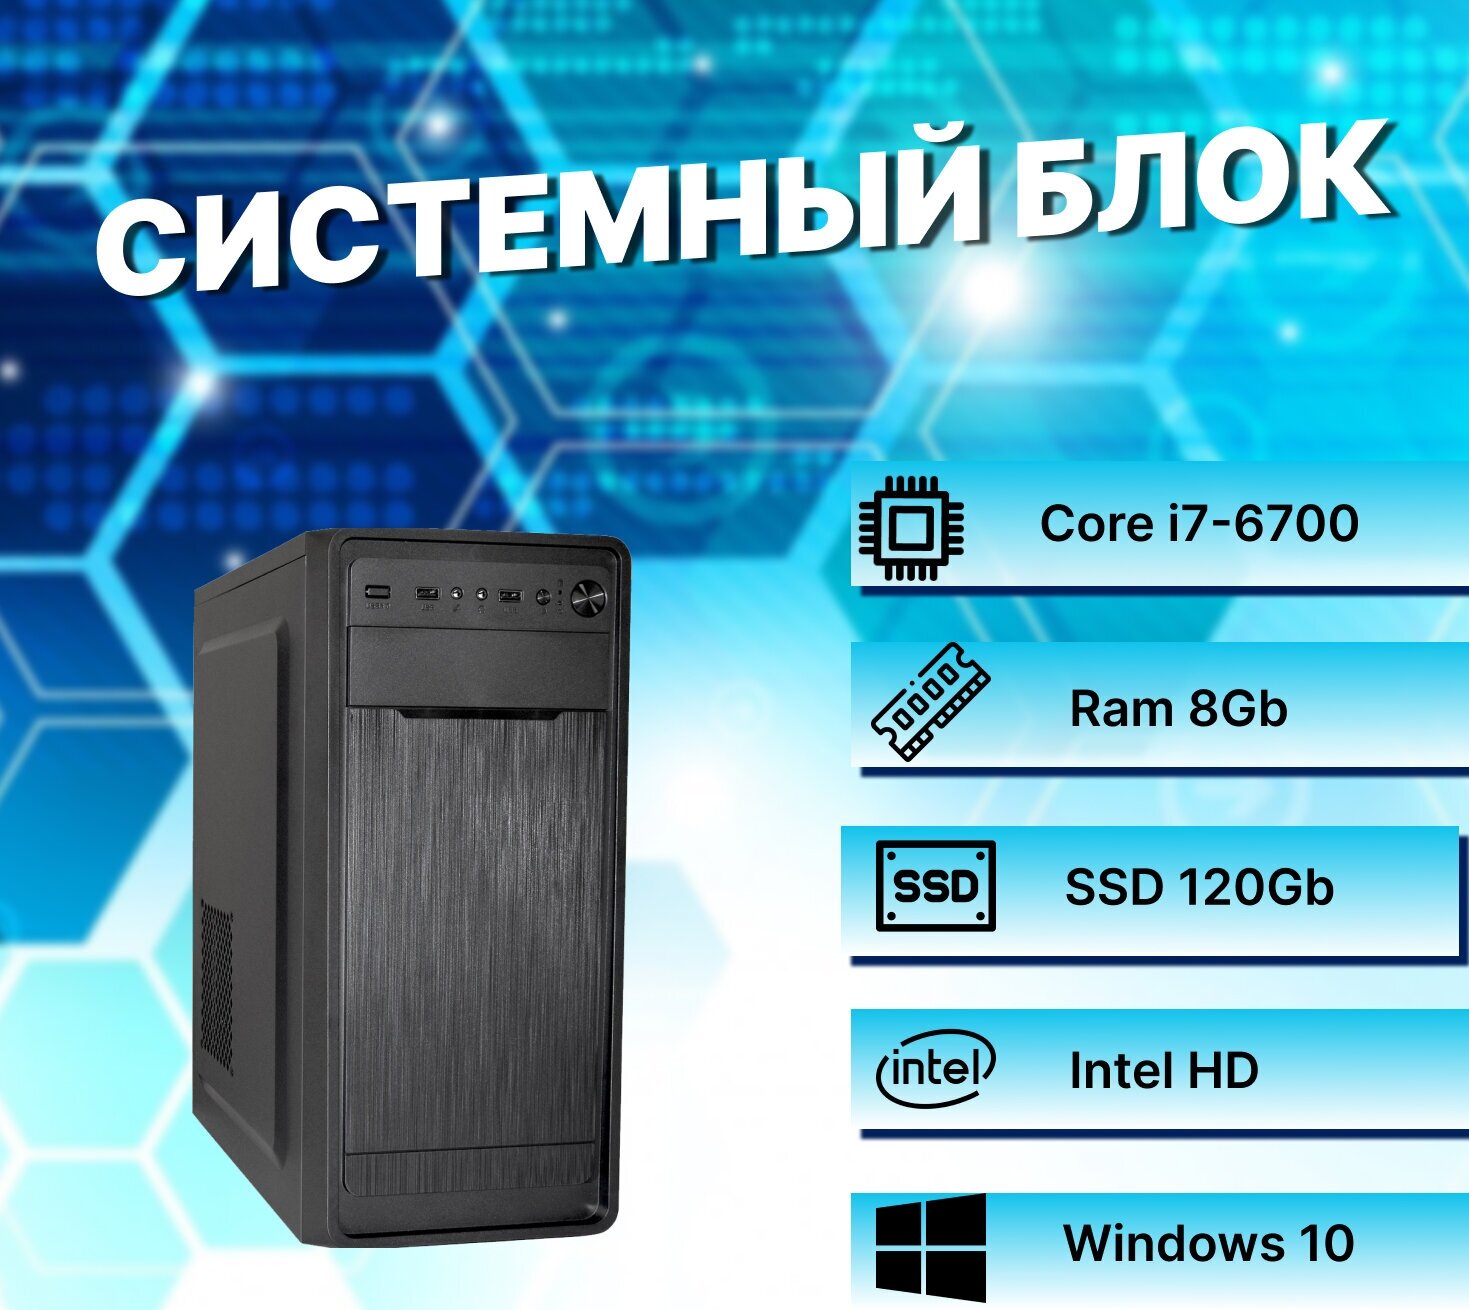 Системный блок Intel Core I7-6700 (3.4ГГц)/ RAM 8Gb/ SSD 120Gb/ Intel HD/ Windows 10 Pro